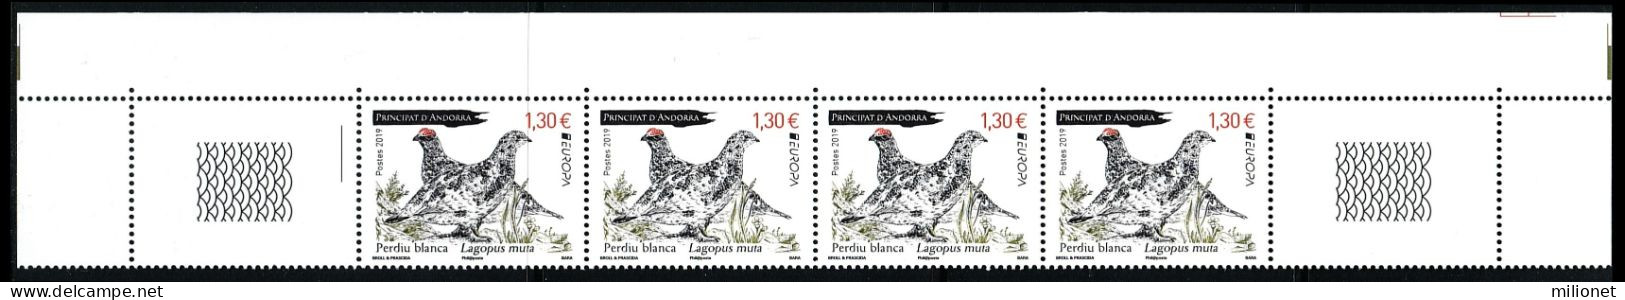 SALE!!! FRENCH ANDORRA ANDORRE 2019 EUROPA CEPT National Birds 4 Stamps + 2 Vignettes (upper Strip) MNH ** - 2019